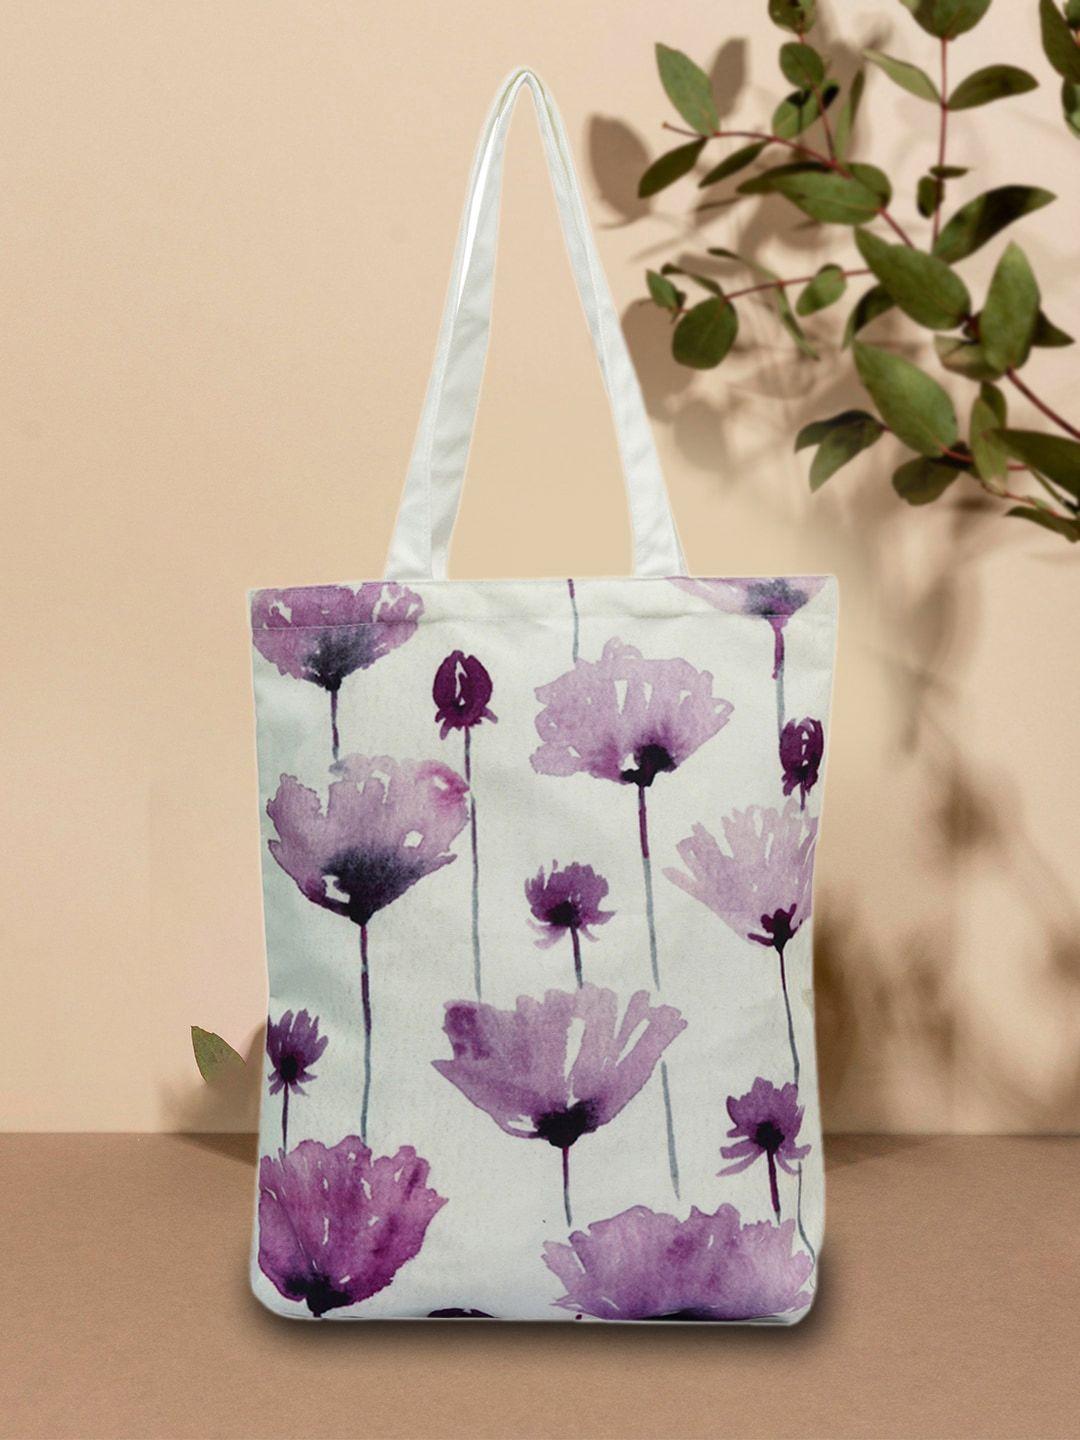 dressberry printed half moon tote bag with tasselled